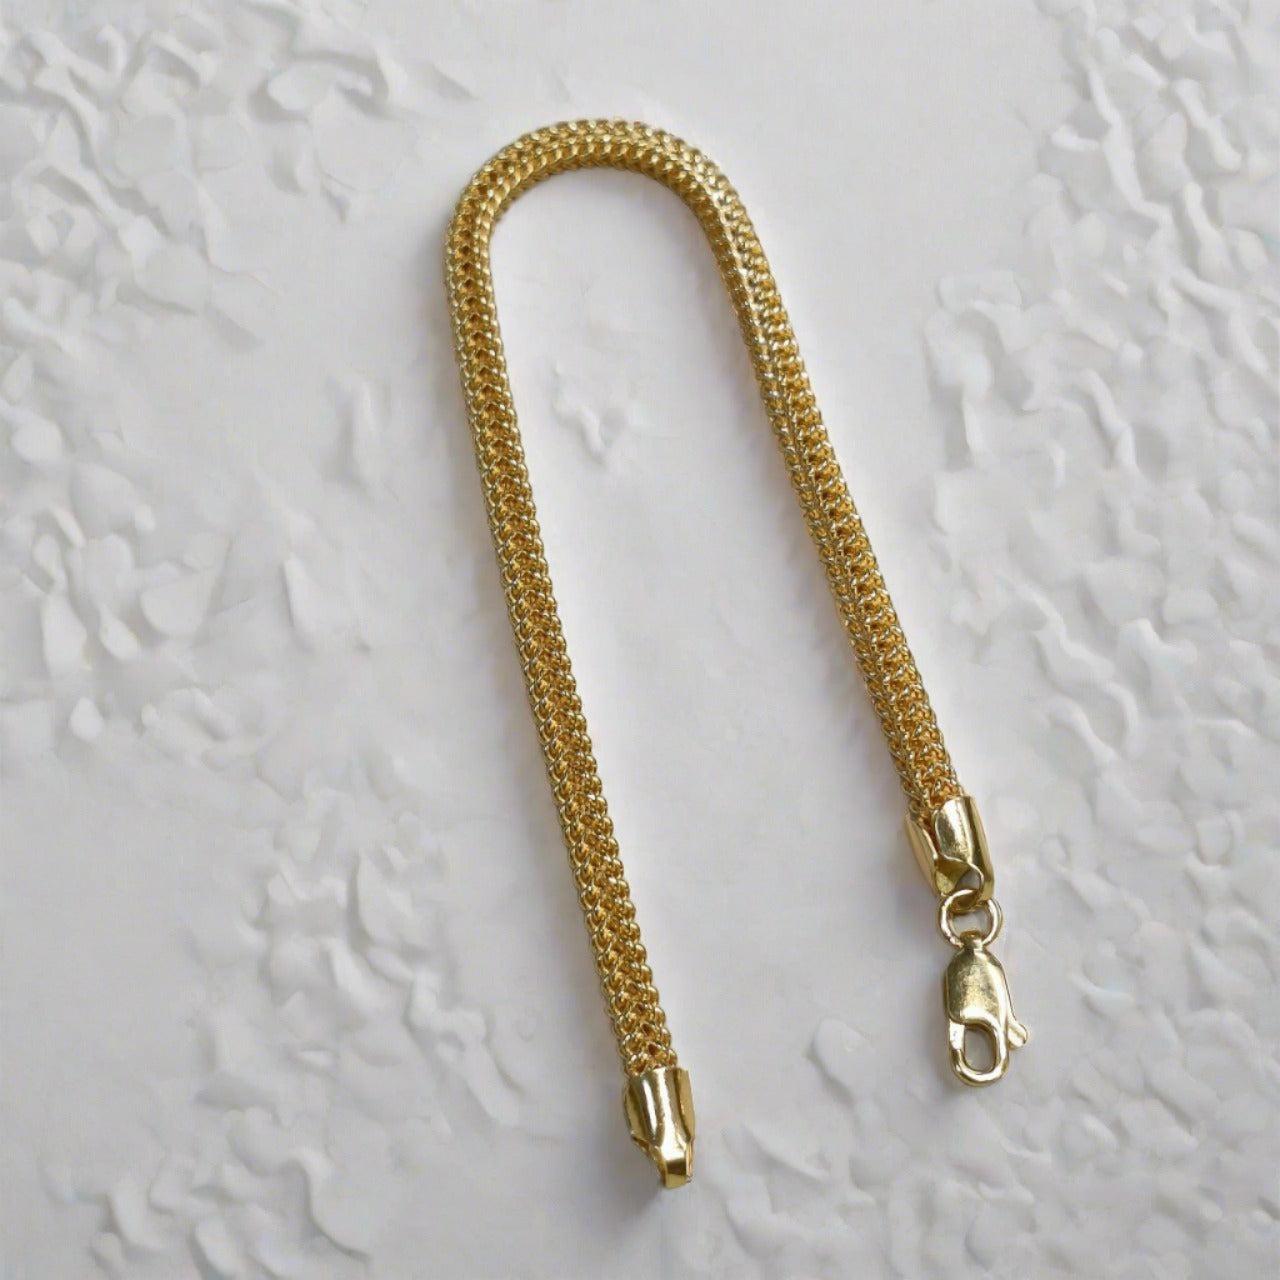 22k / 916 Gold Hollow Dragon Bracelet-Bracelets-Best Gold Shop